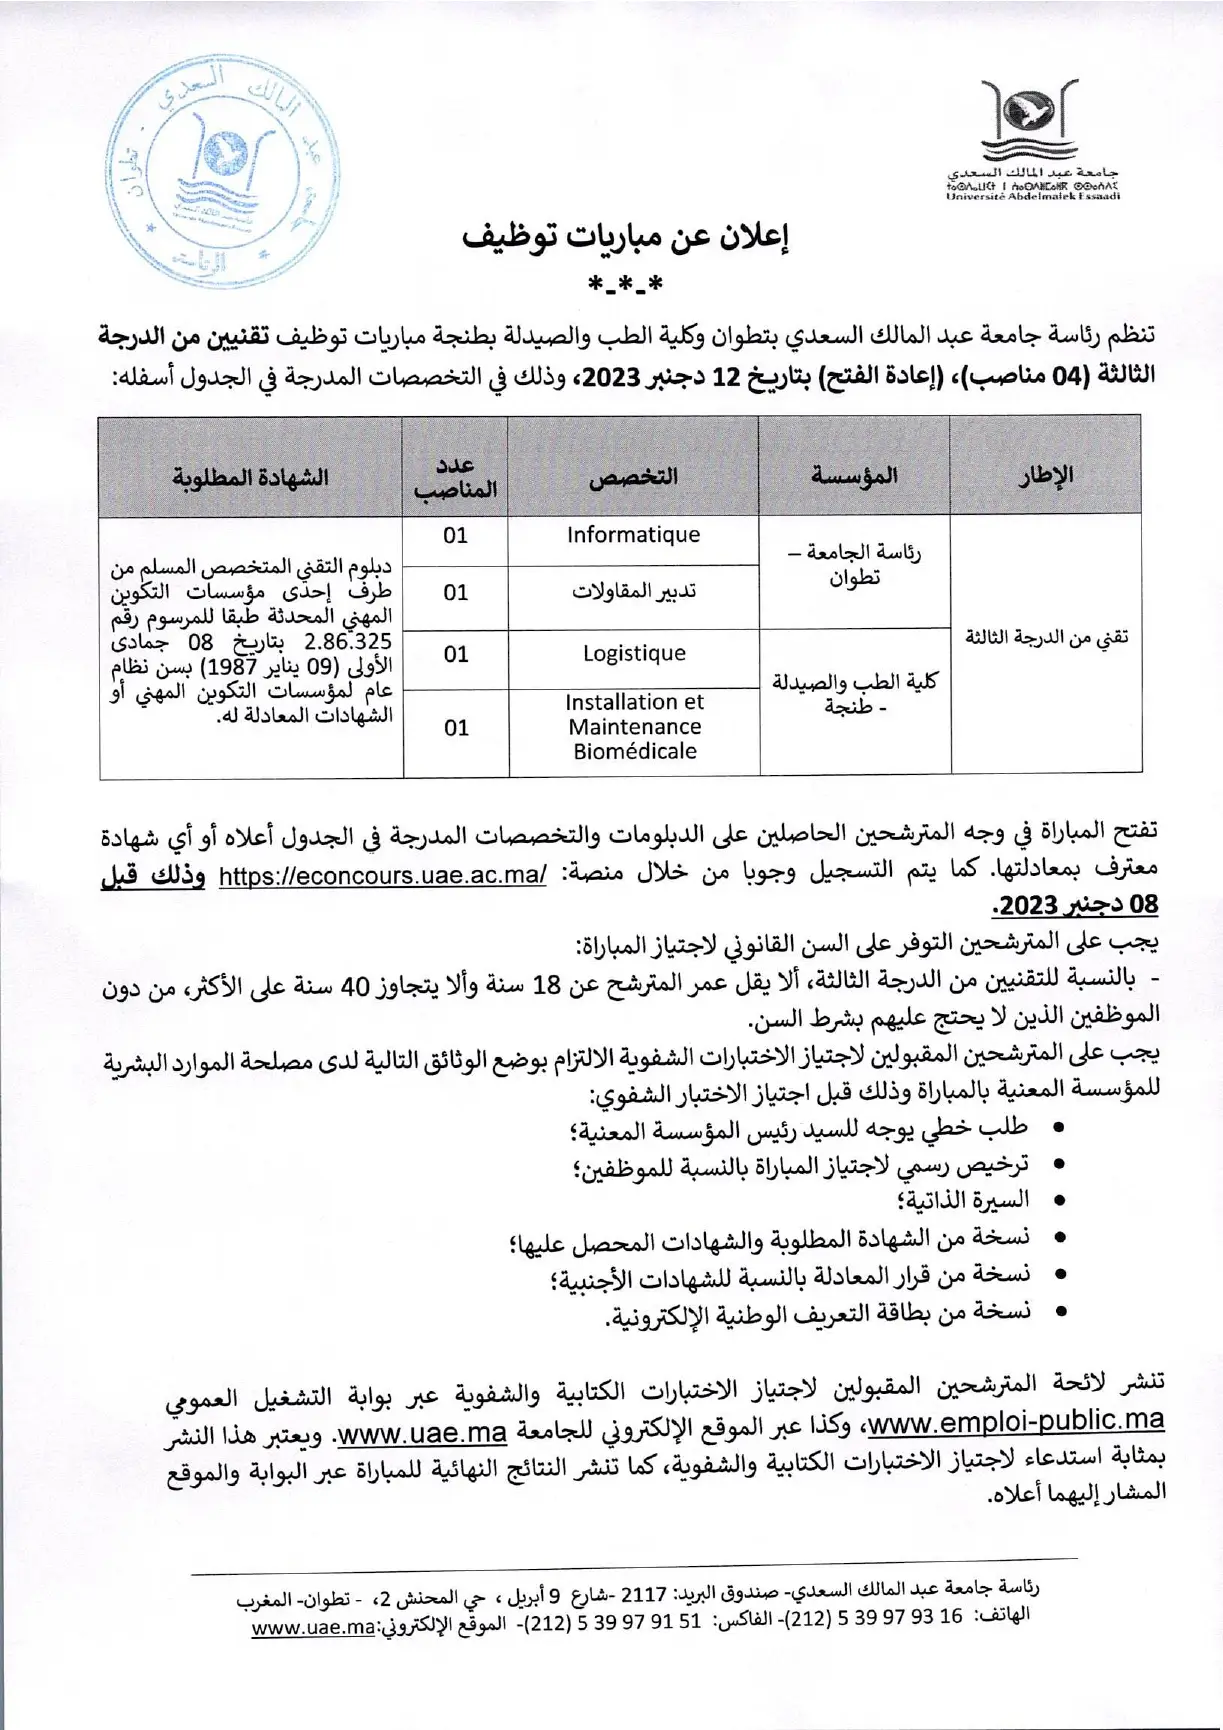 Concours de recrutement Université Abdelmalek Essaadi 2023